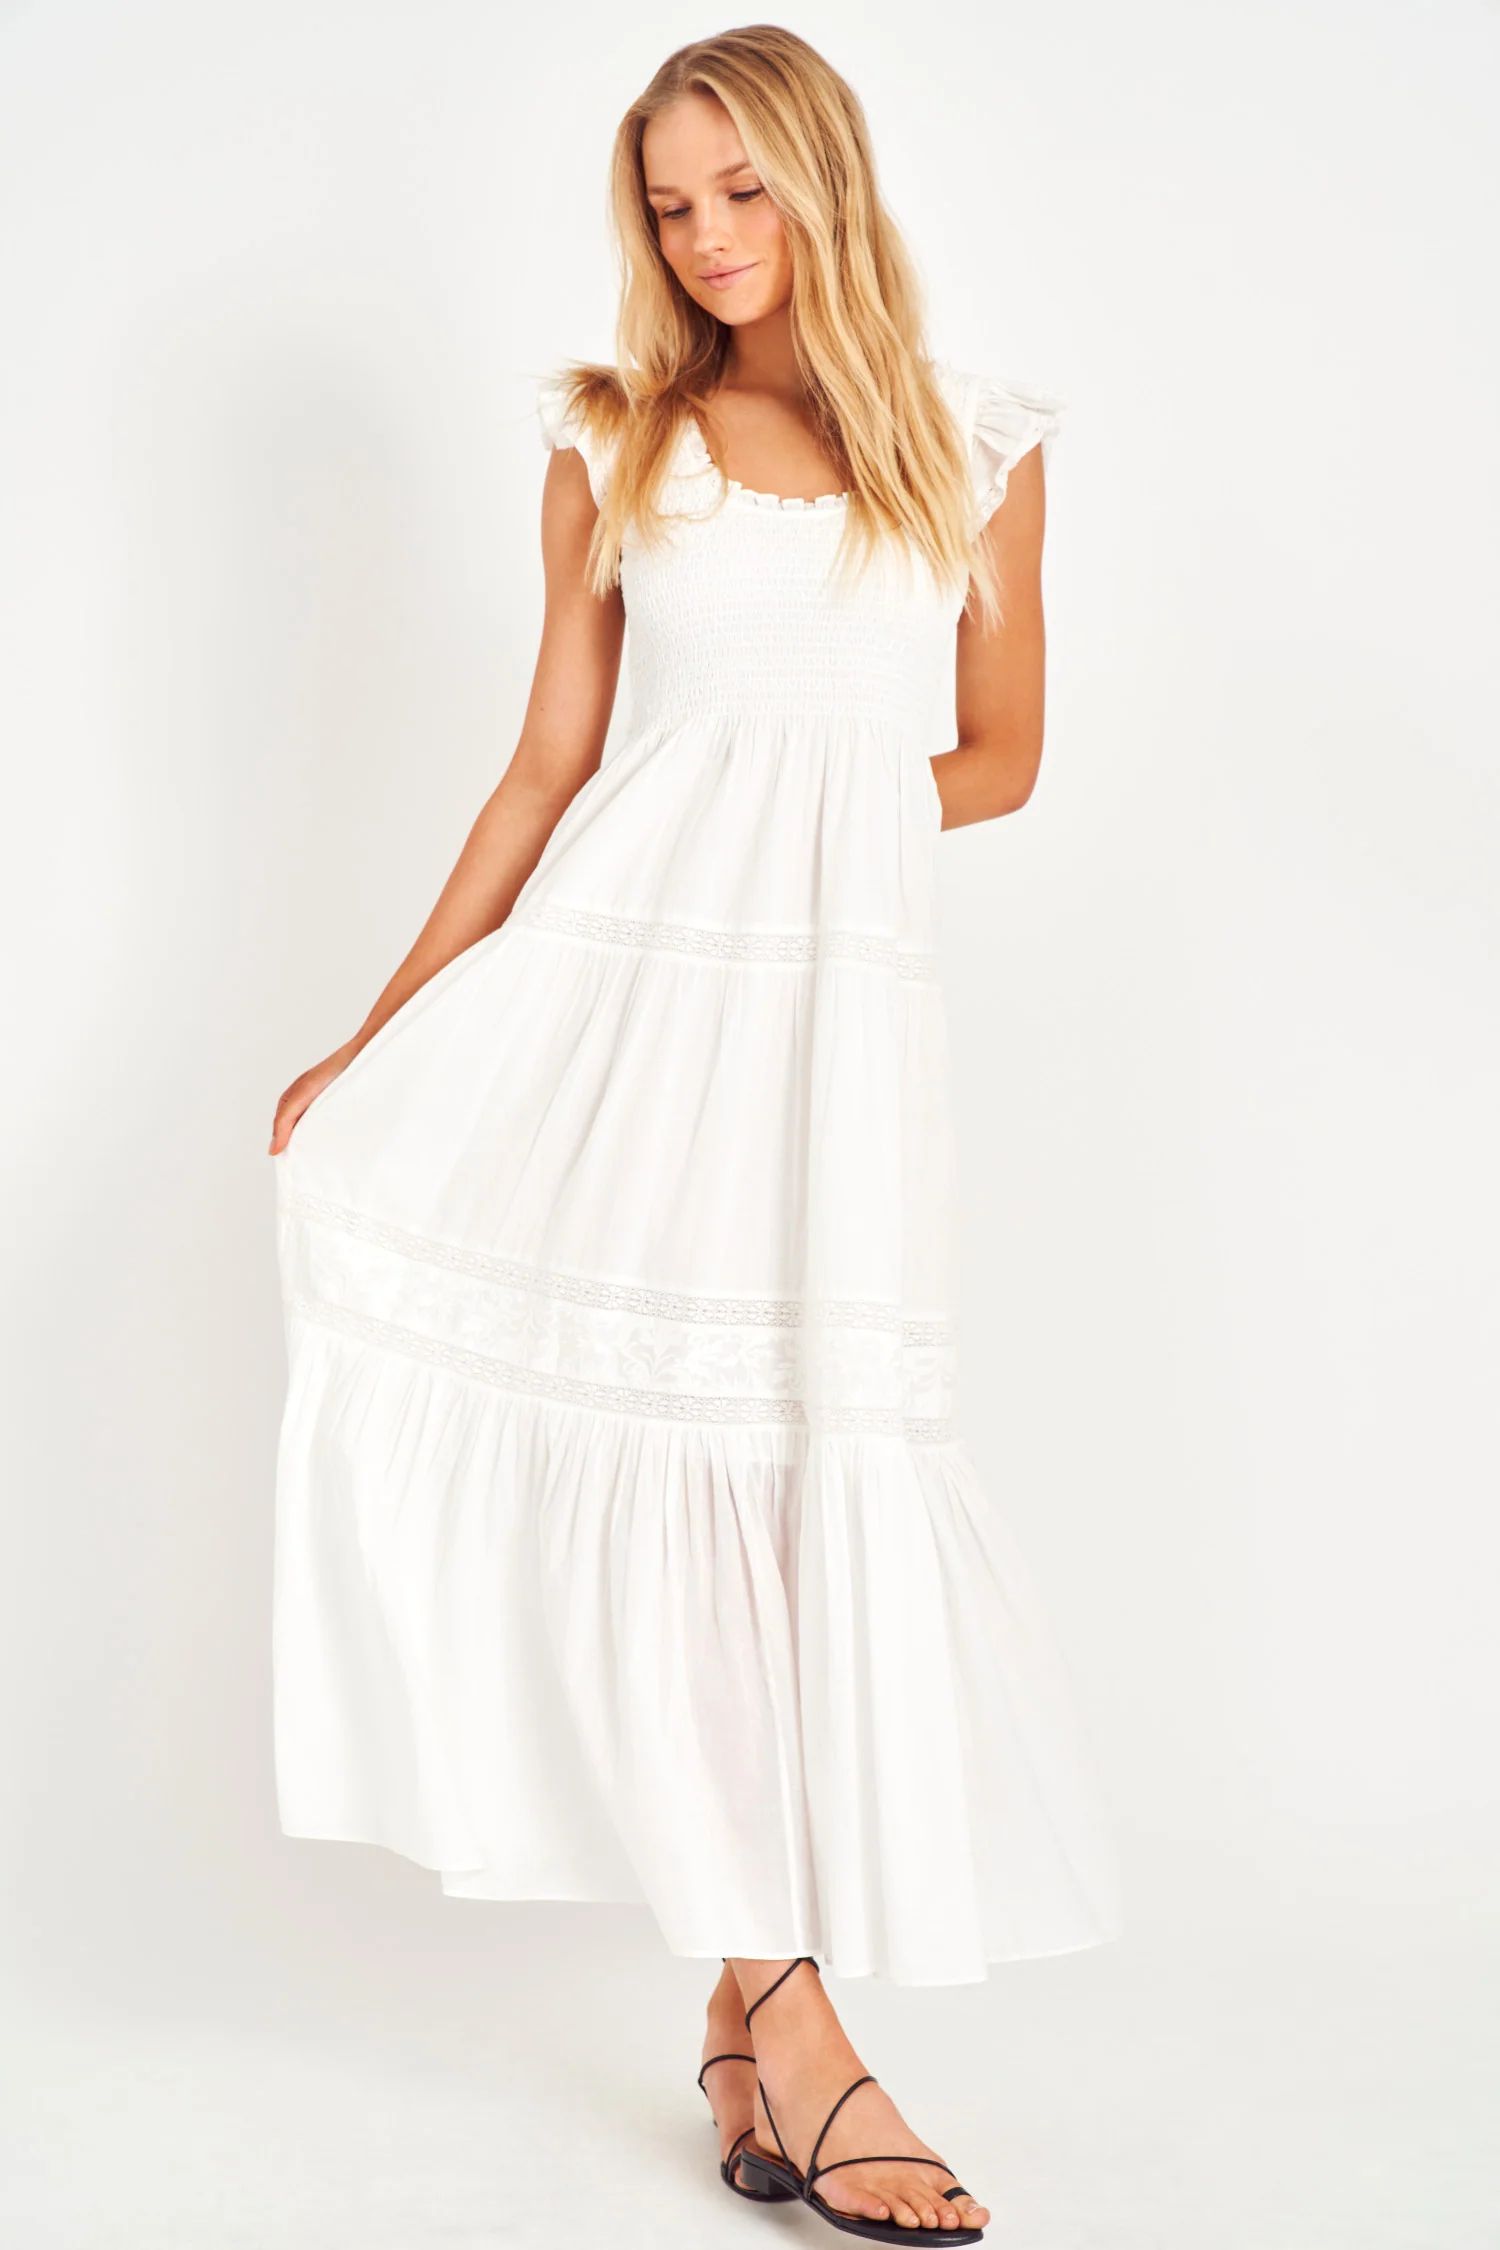 Chessie Heritage Cotton Maxi Dress | LoveShackFancy